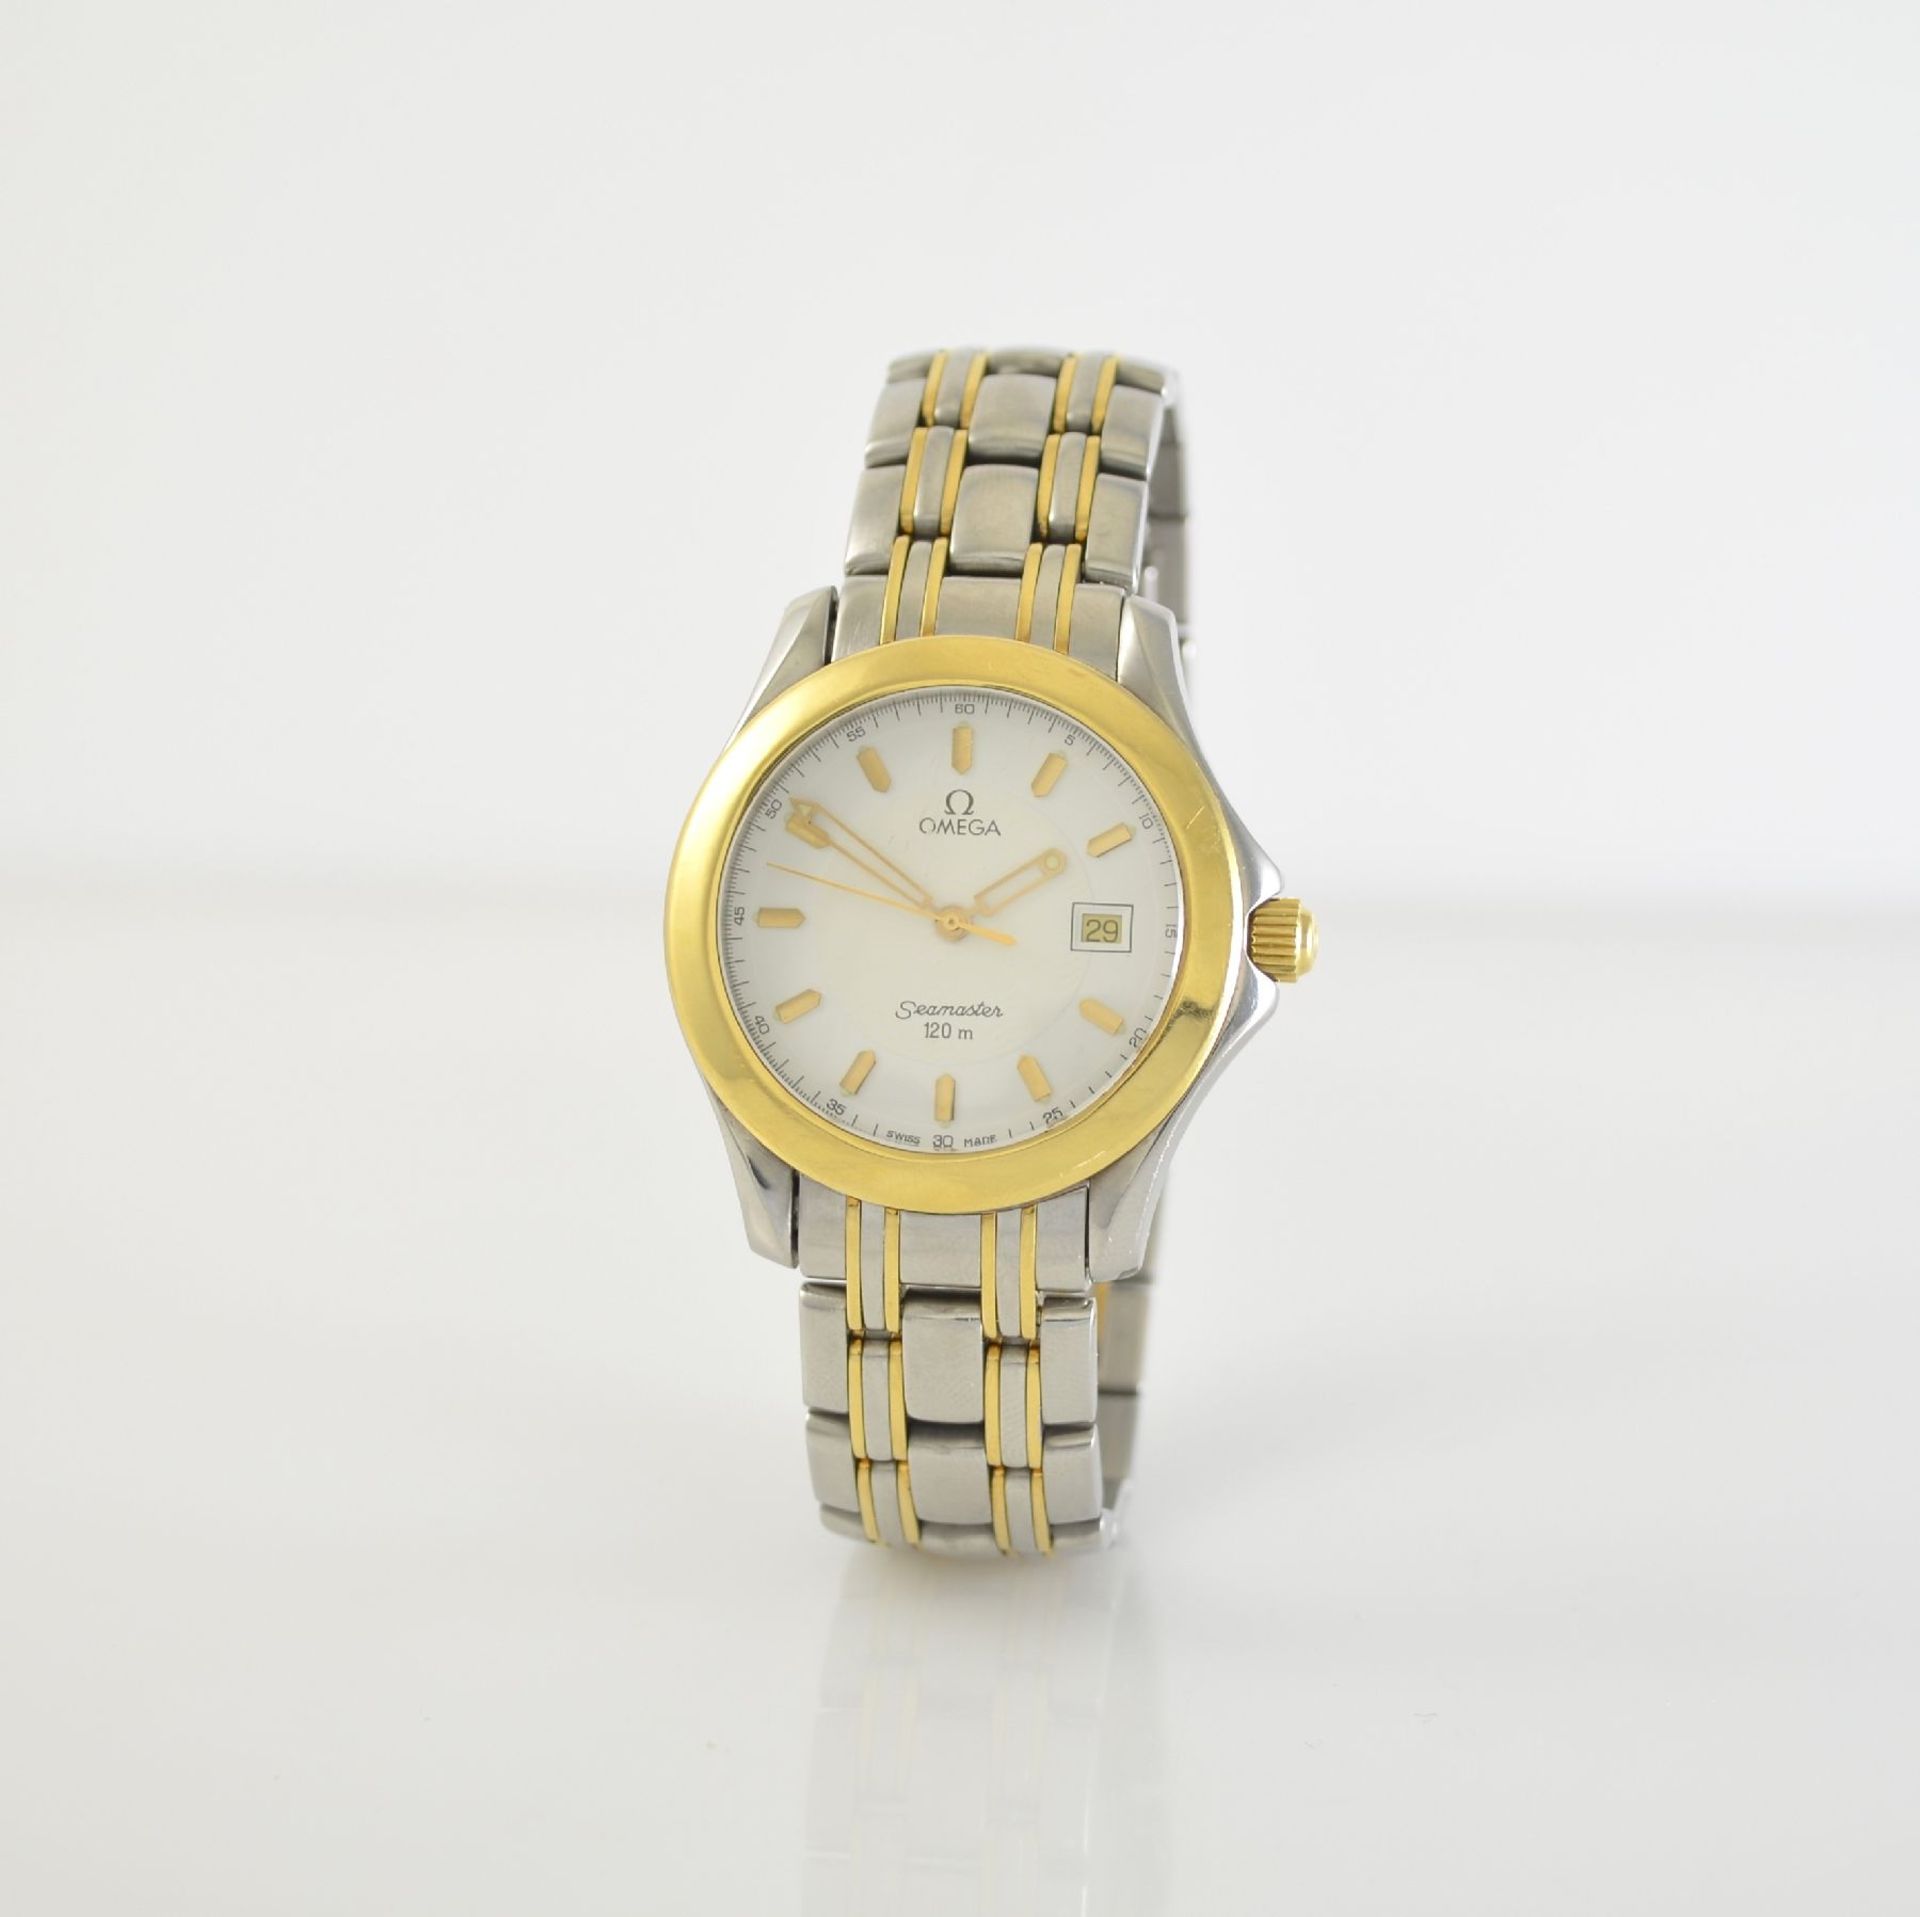 OMEGA gents wristwatch series Seamaster, Switzerland around 1996, 168.1501/196.1501, stainless - Image 3 of 6